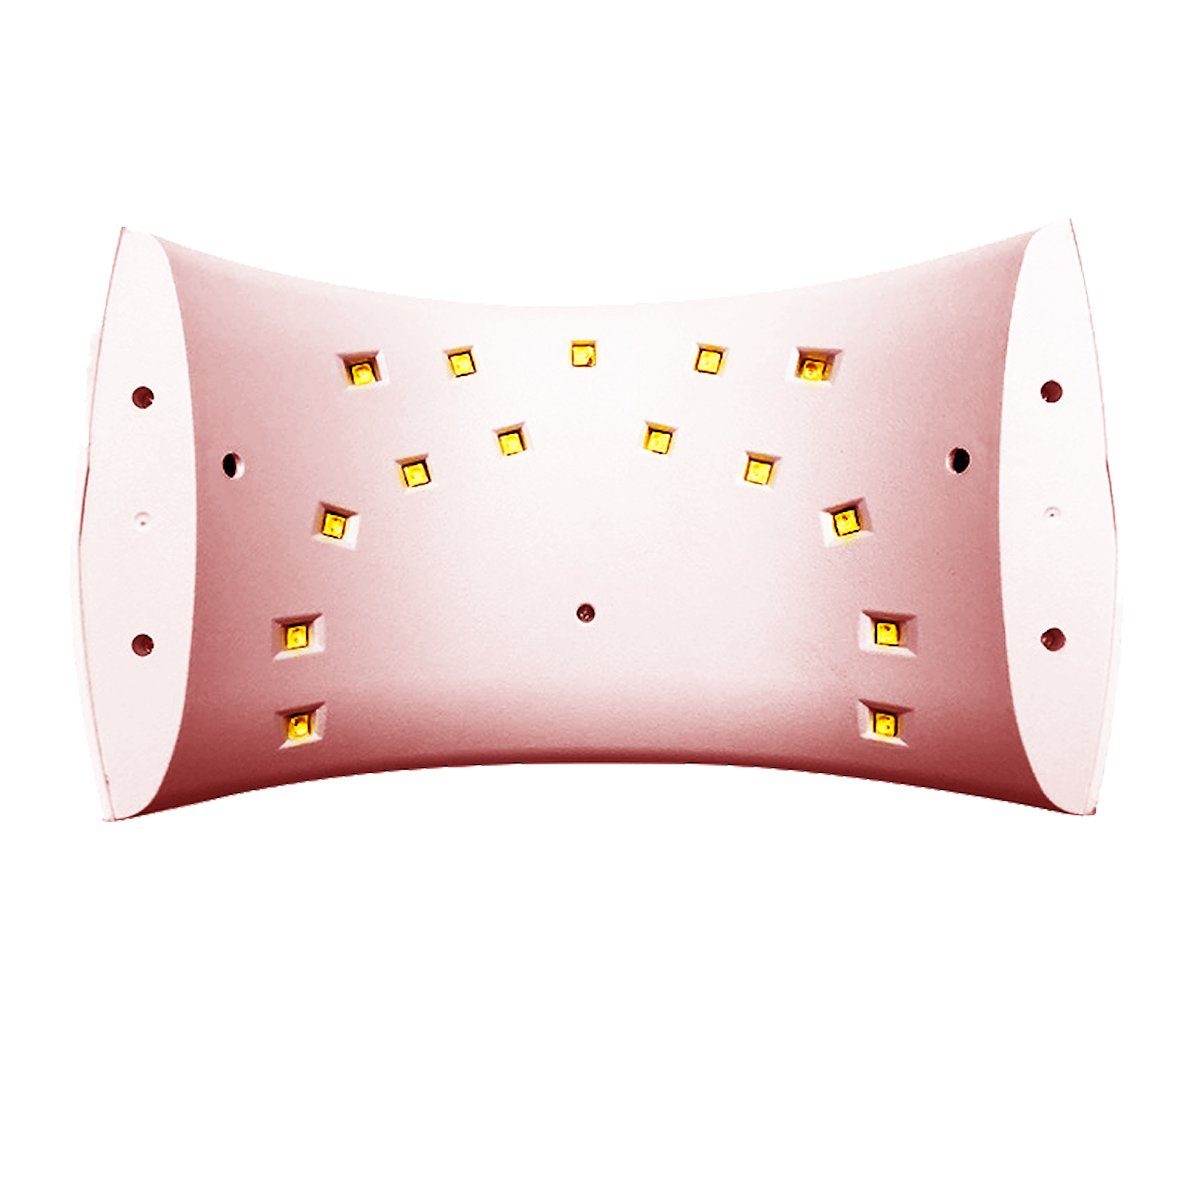 Bodenplatte mit rosa Garden Sensor, - Lampe Sun Nails LED/DUAL Lichthärtungsgerät ohne SUN9s